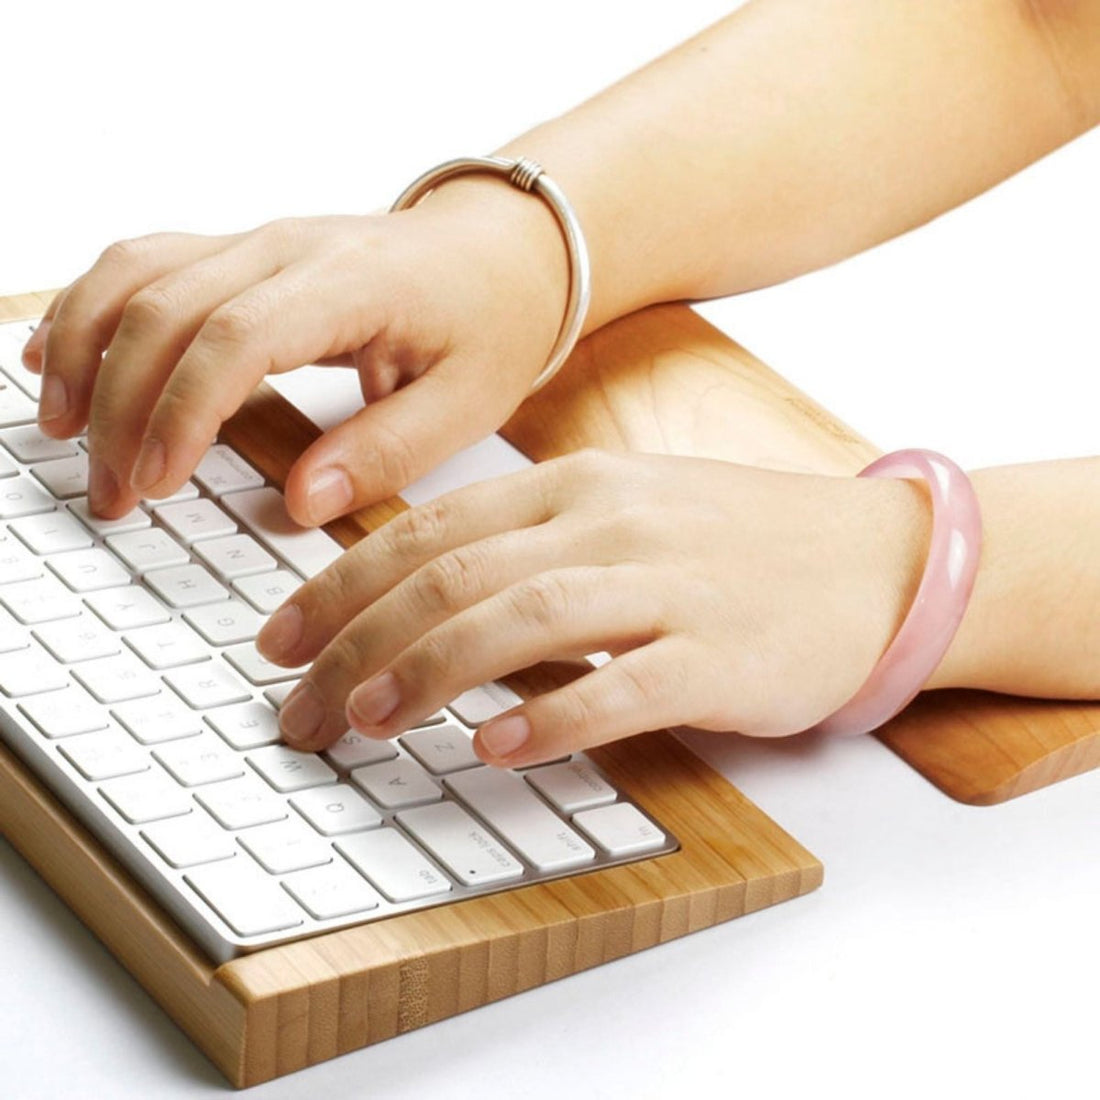 Bamboo Apple Magic Keyboard Tray - iWoodStore